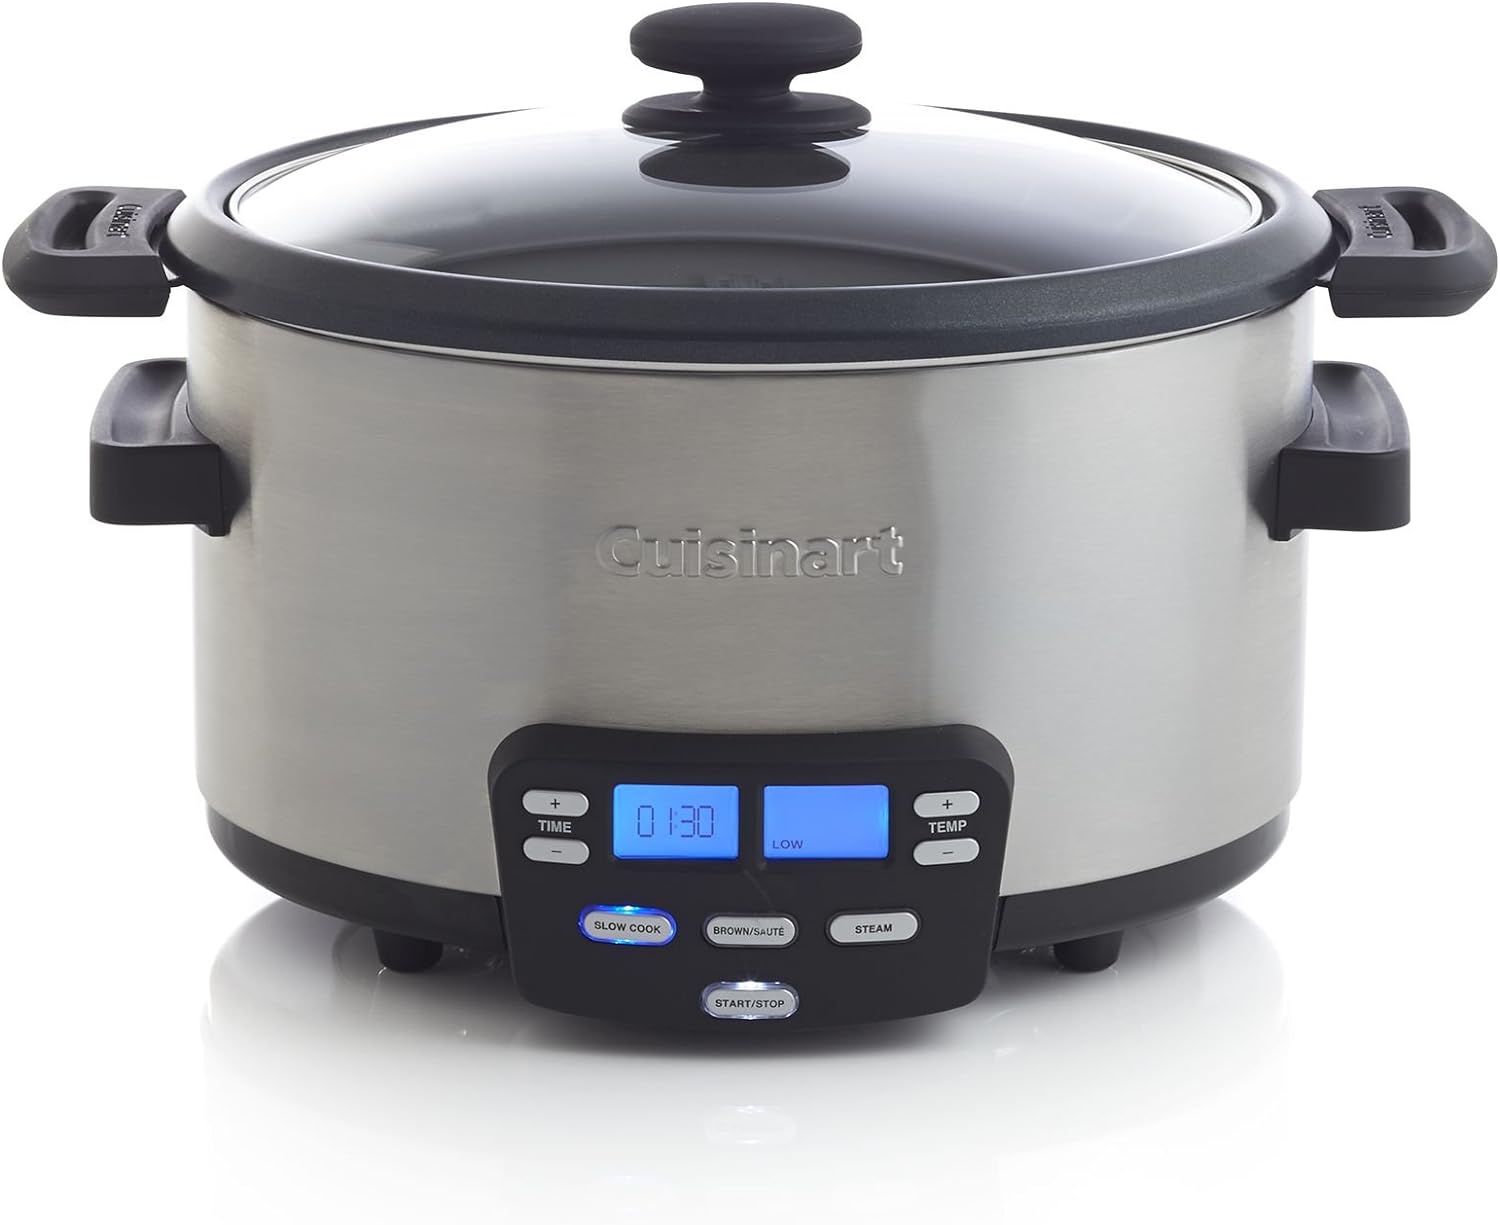 Cuisinart MSC-400 3-In-1 Cook Central 4-Quart Multi-Cooker: Slow Cooker, Brown/Saute, Steamer, Silver